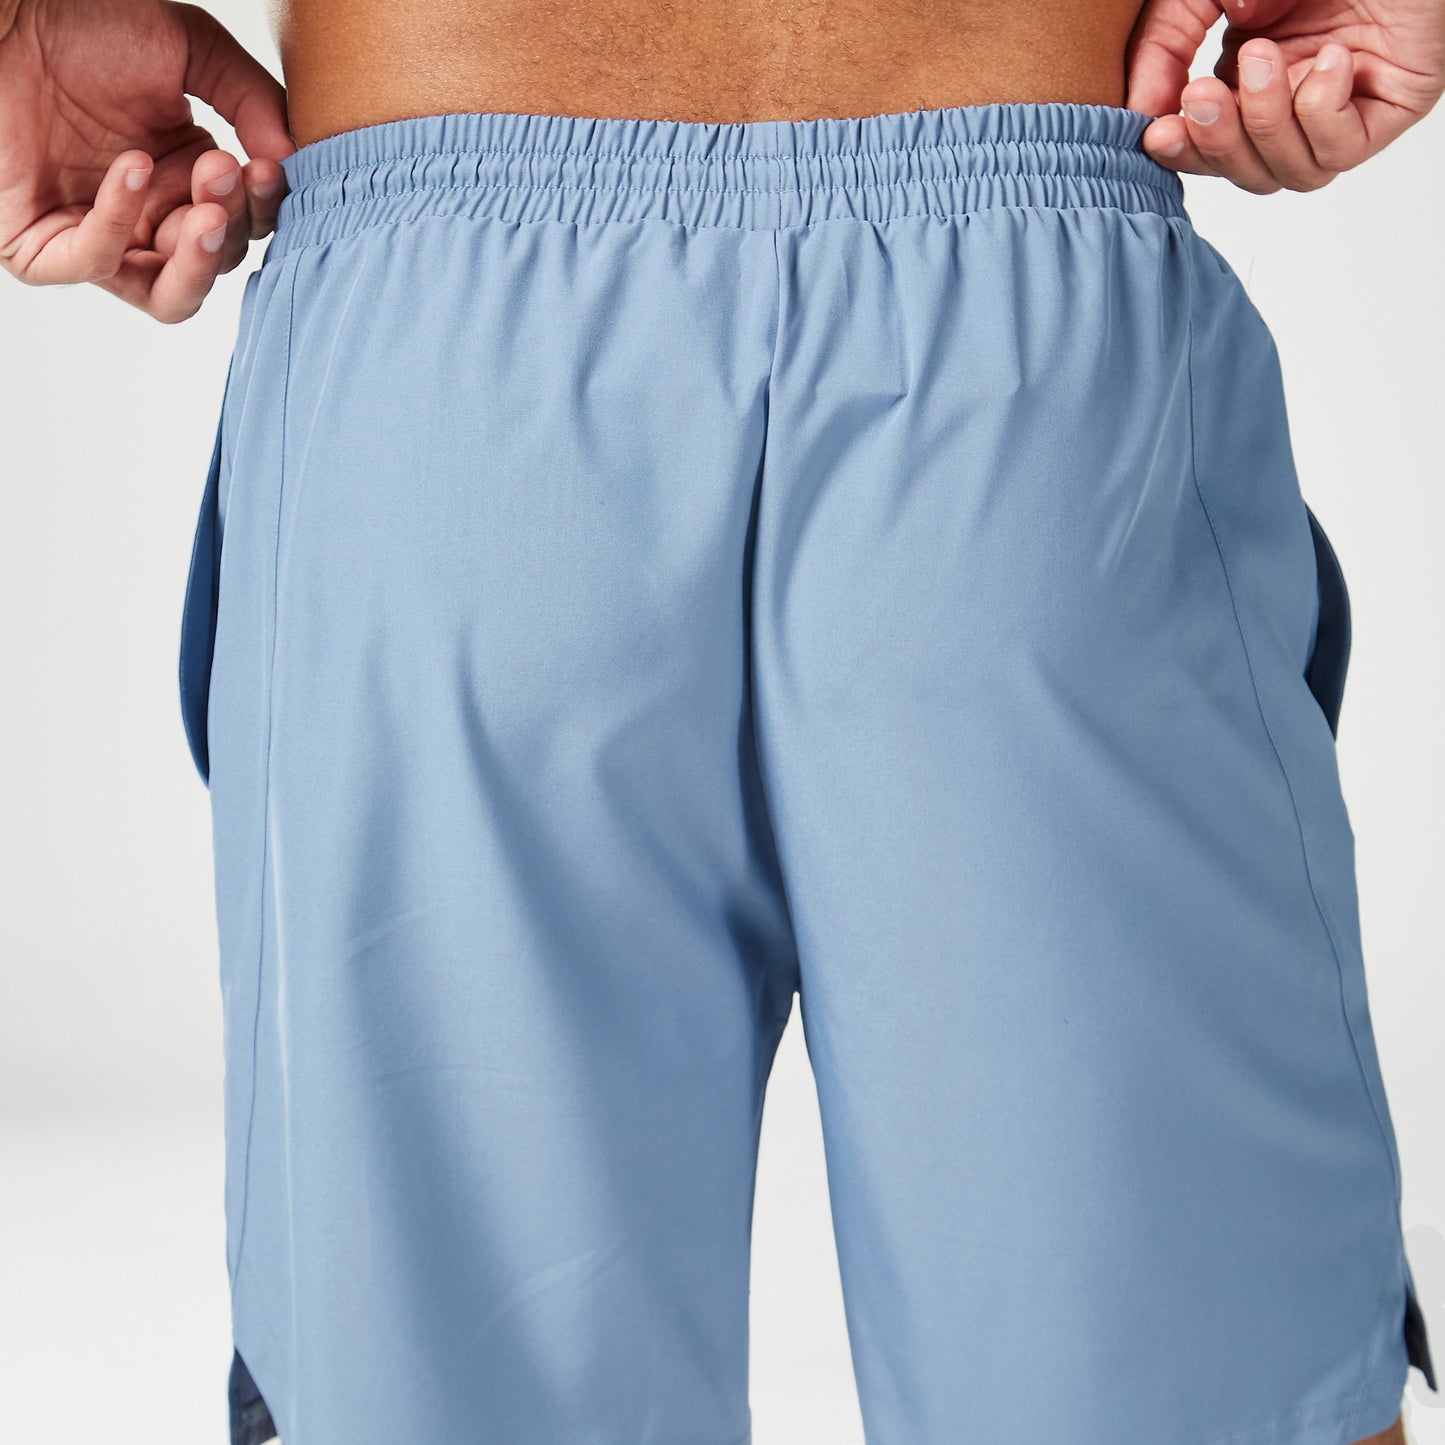 Essential 7" Shorts 2.0 - Coronet Blue